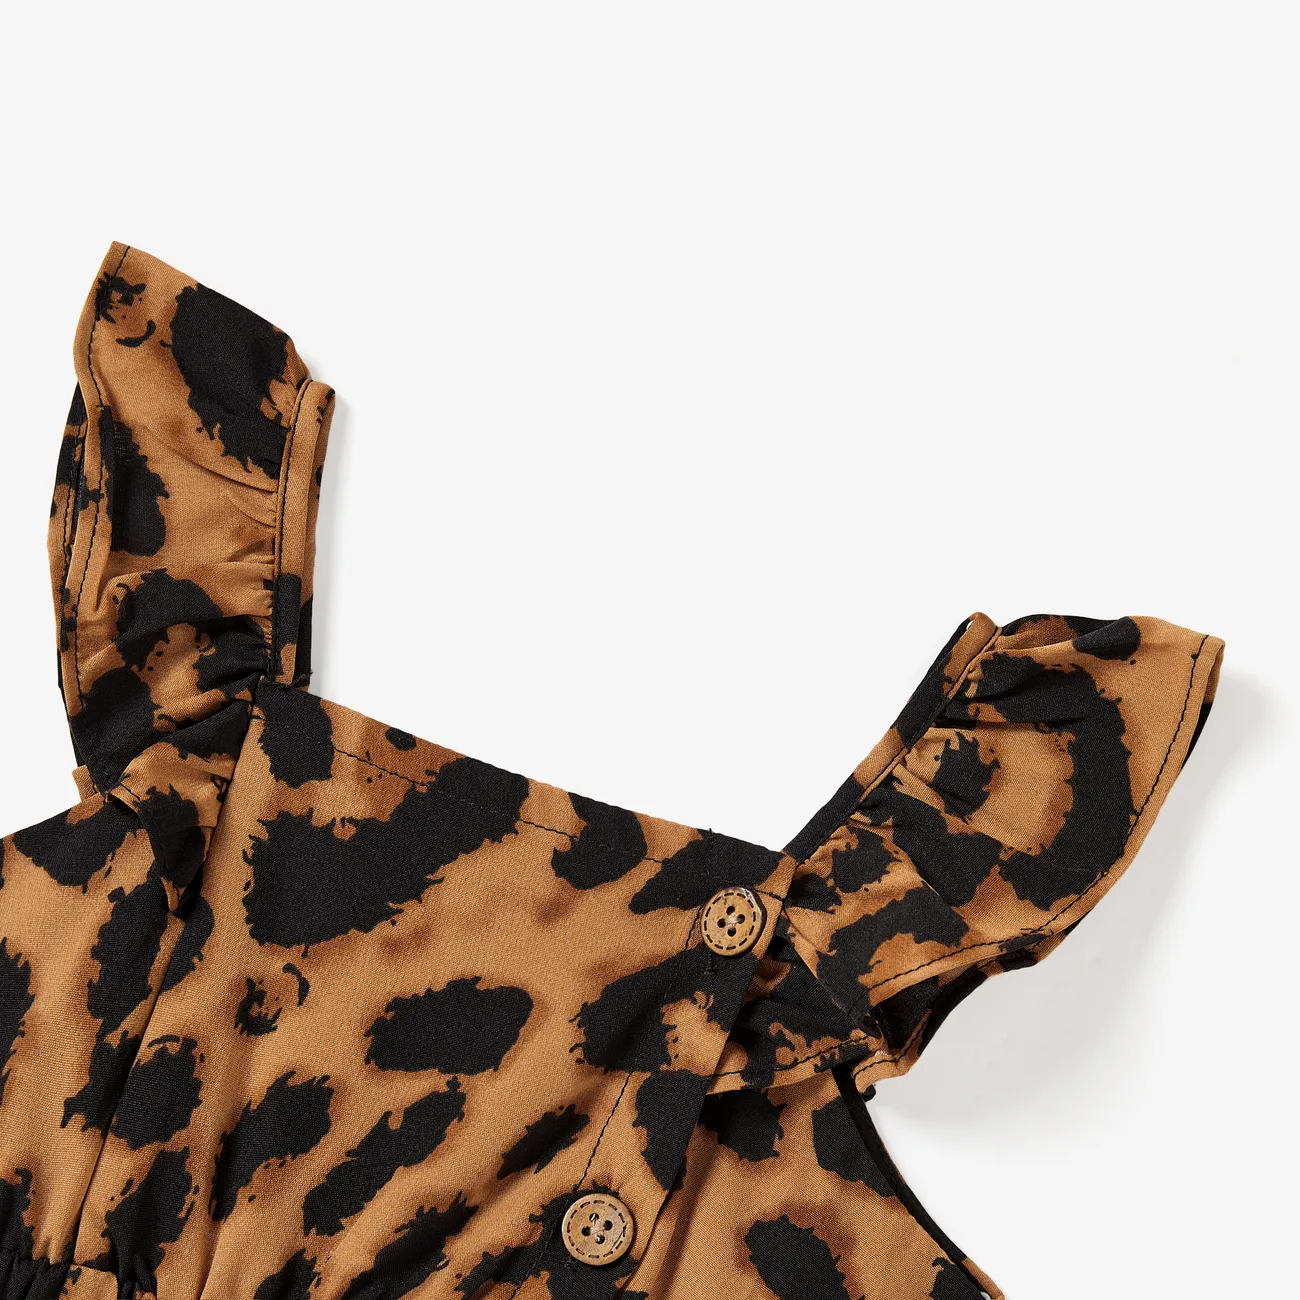 Family Matching Black Tee and Leopard Print High Neck Halter Tie Back Dress Sets Khaki big image 1